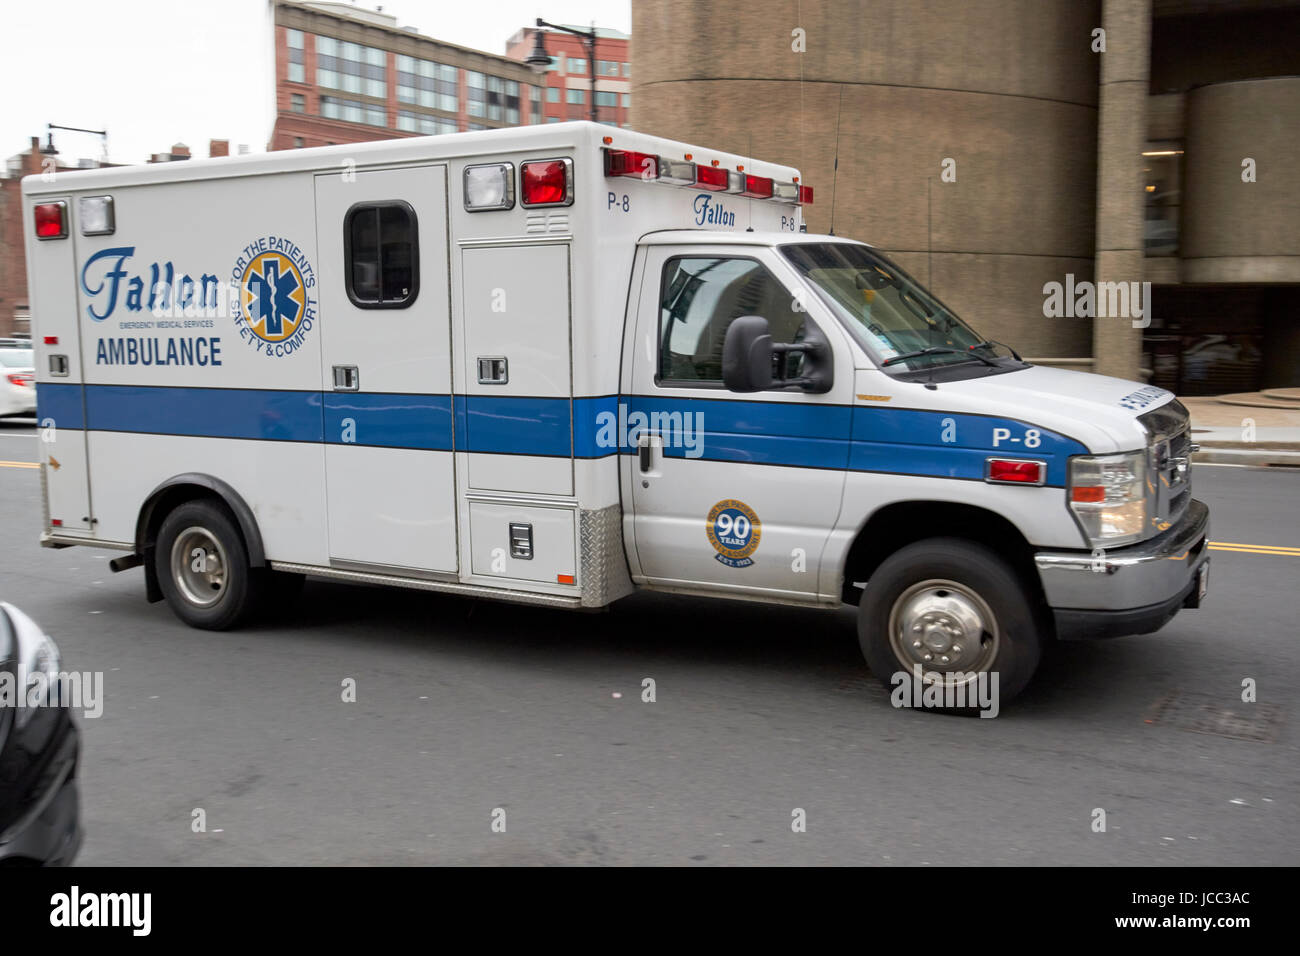 Fallon emergency medical services ambulance speeding on call in Boston USA, deliberate motion blur Stock Photo